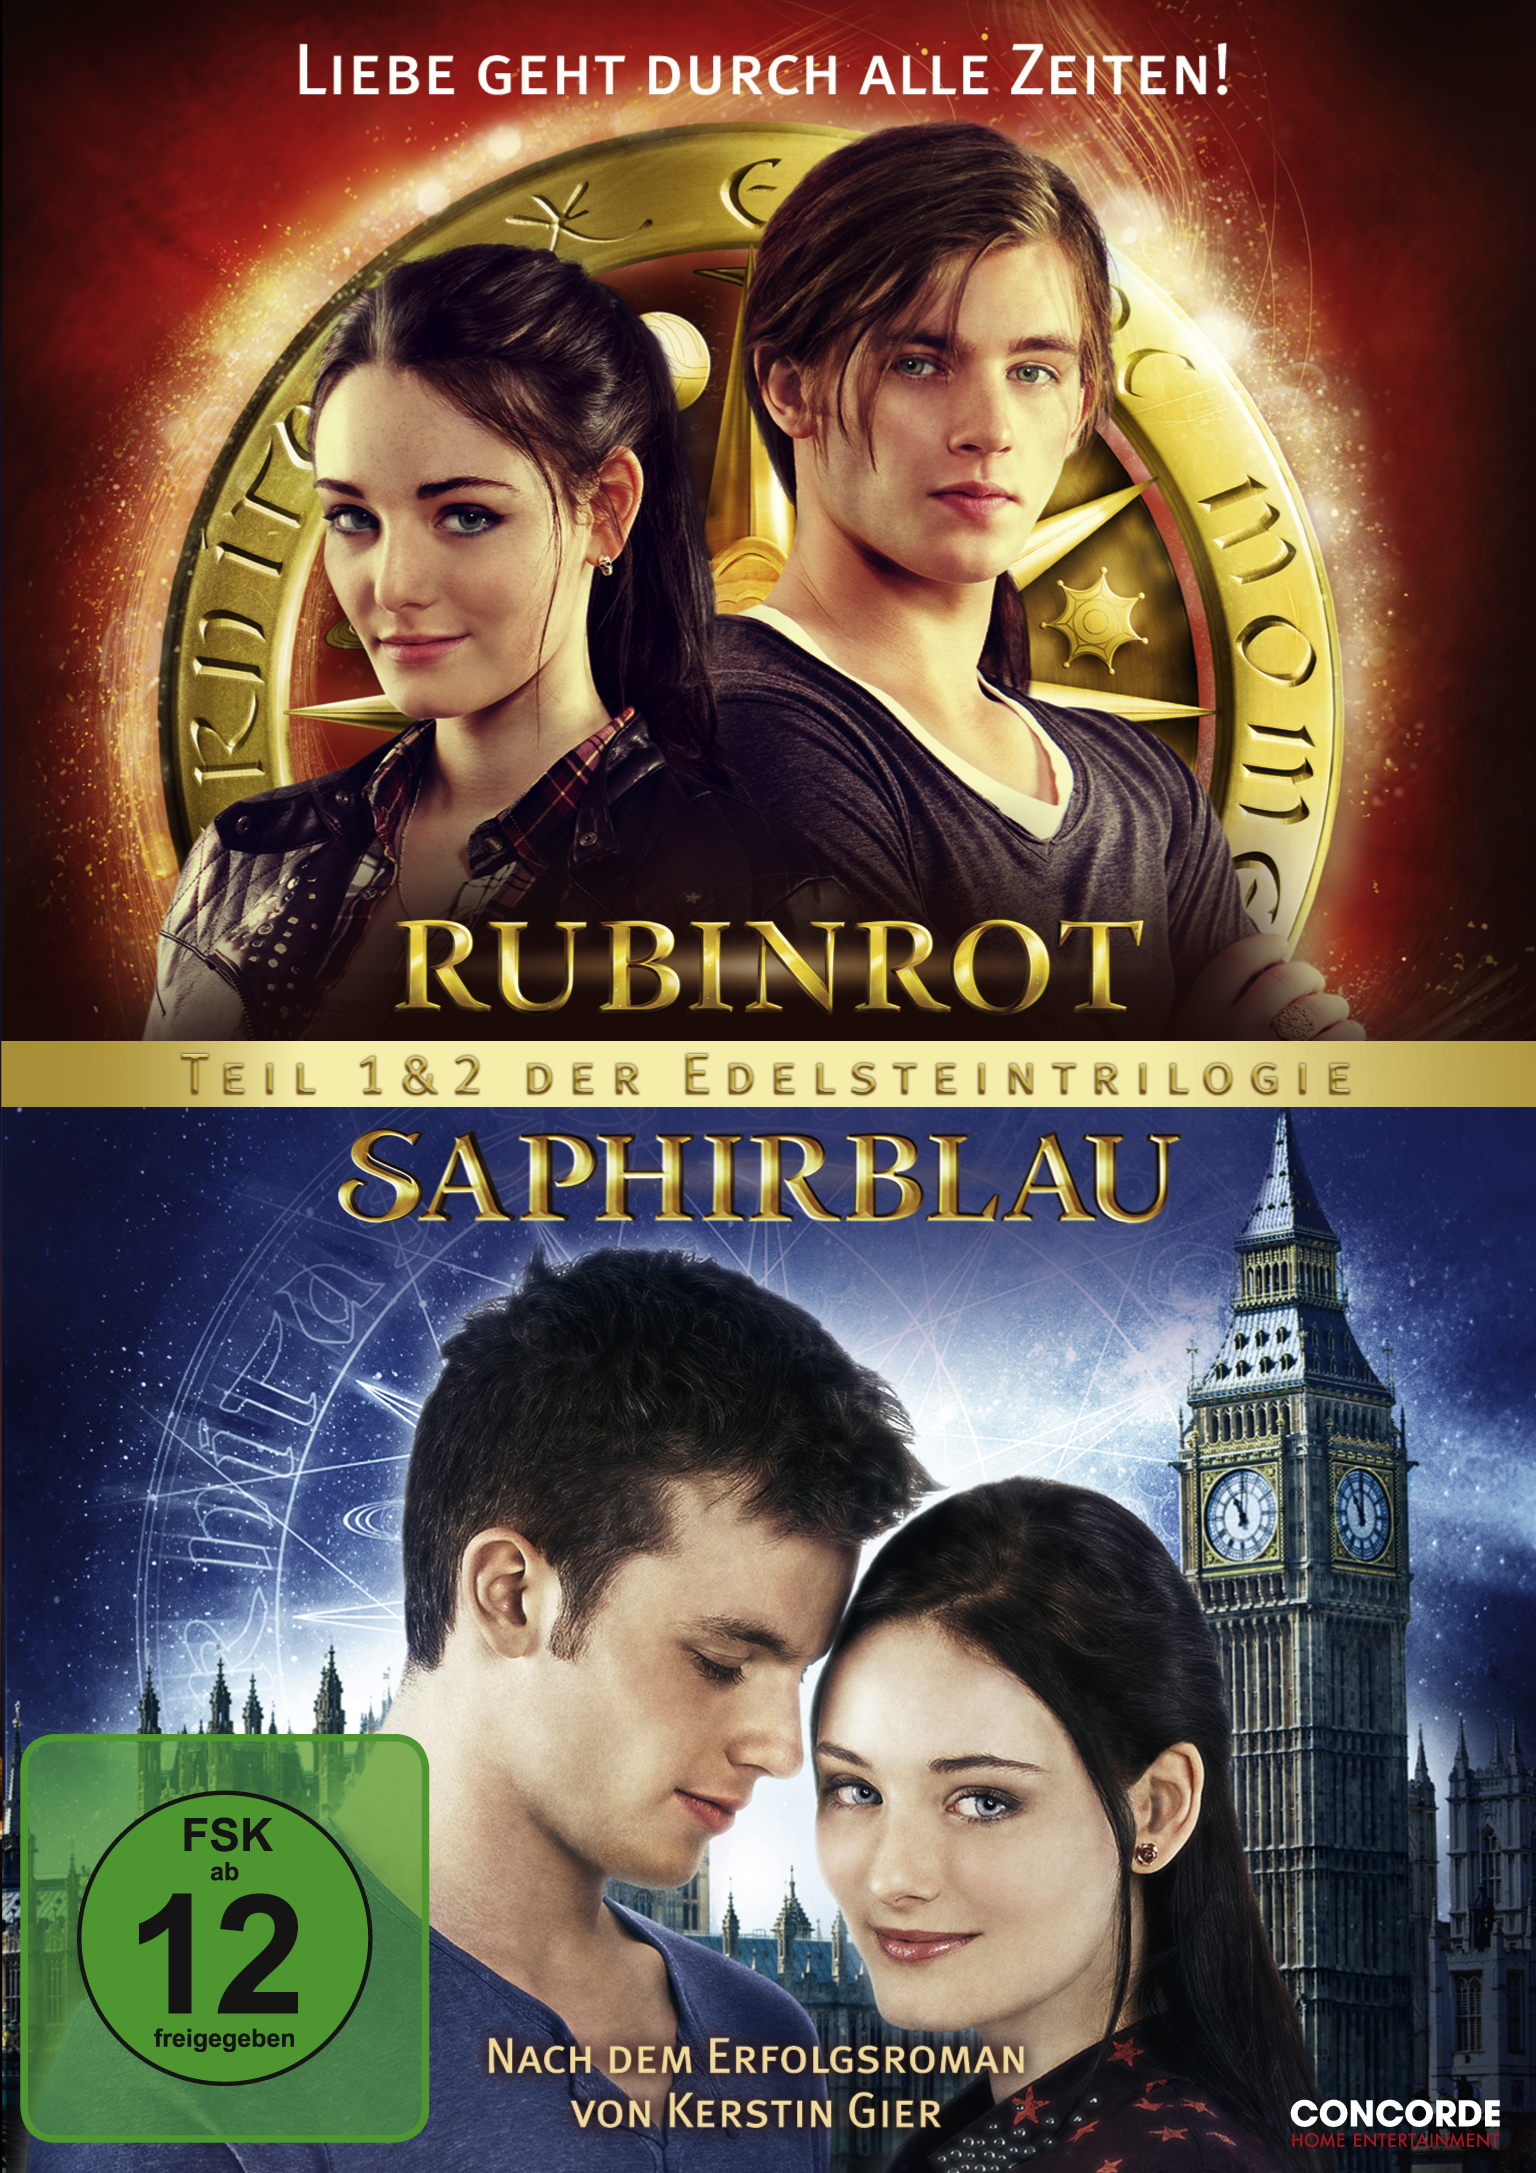 DVD Die Rubinrot/Saphirblau - Doppeledition